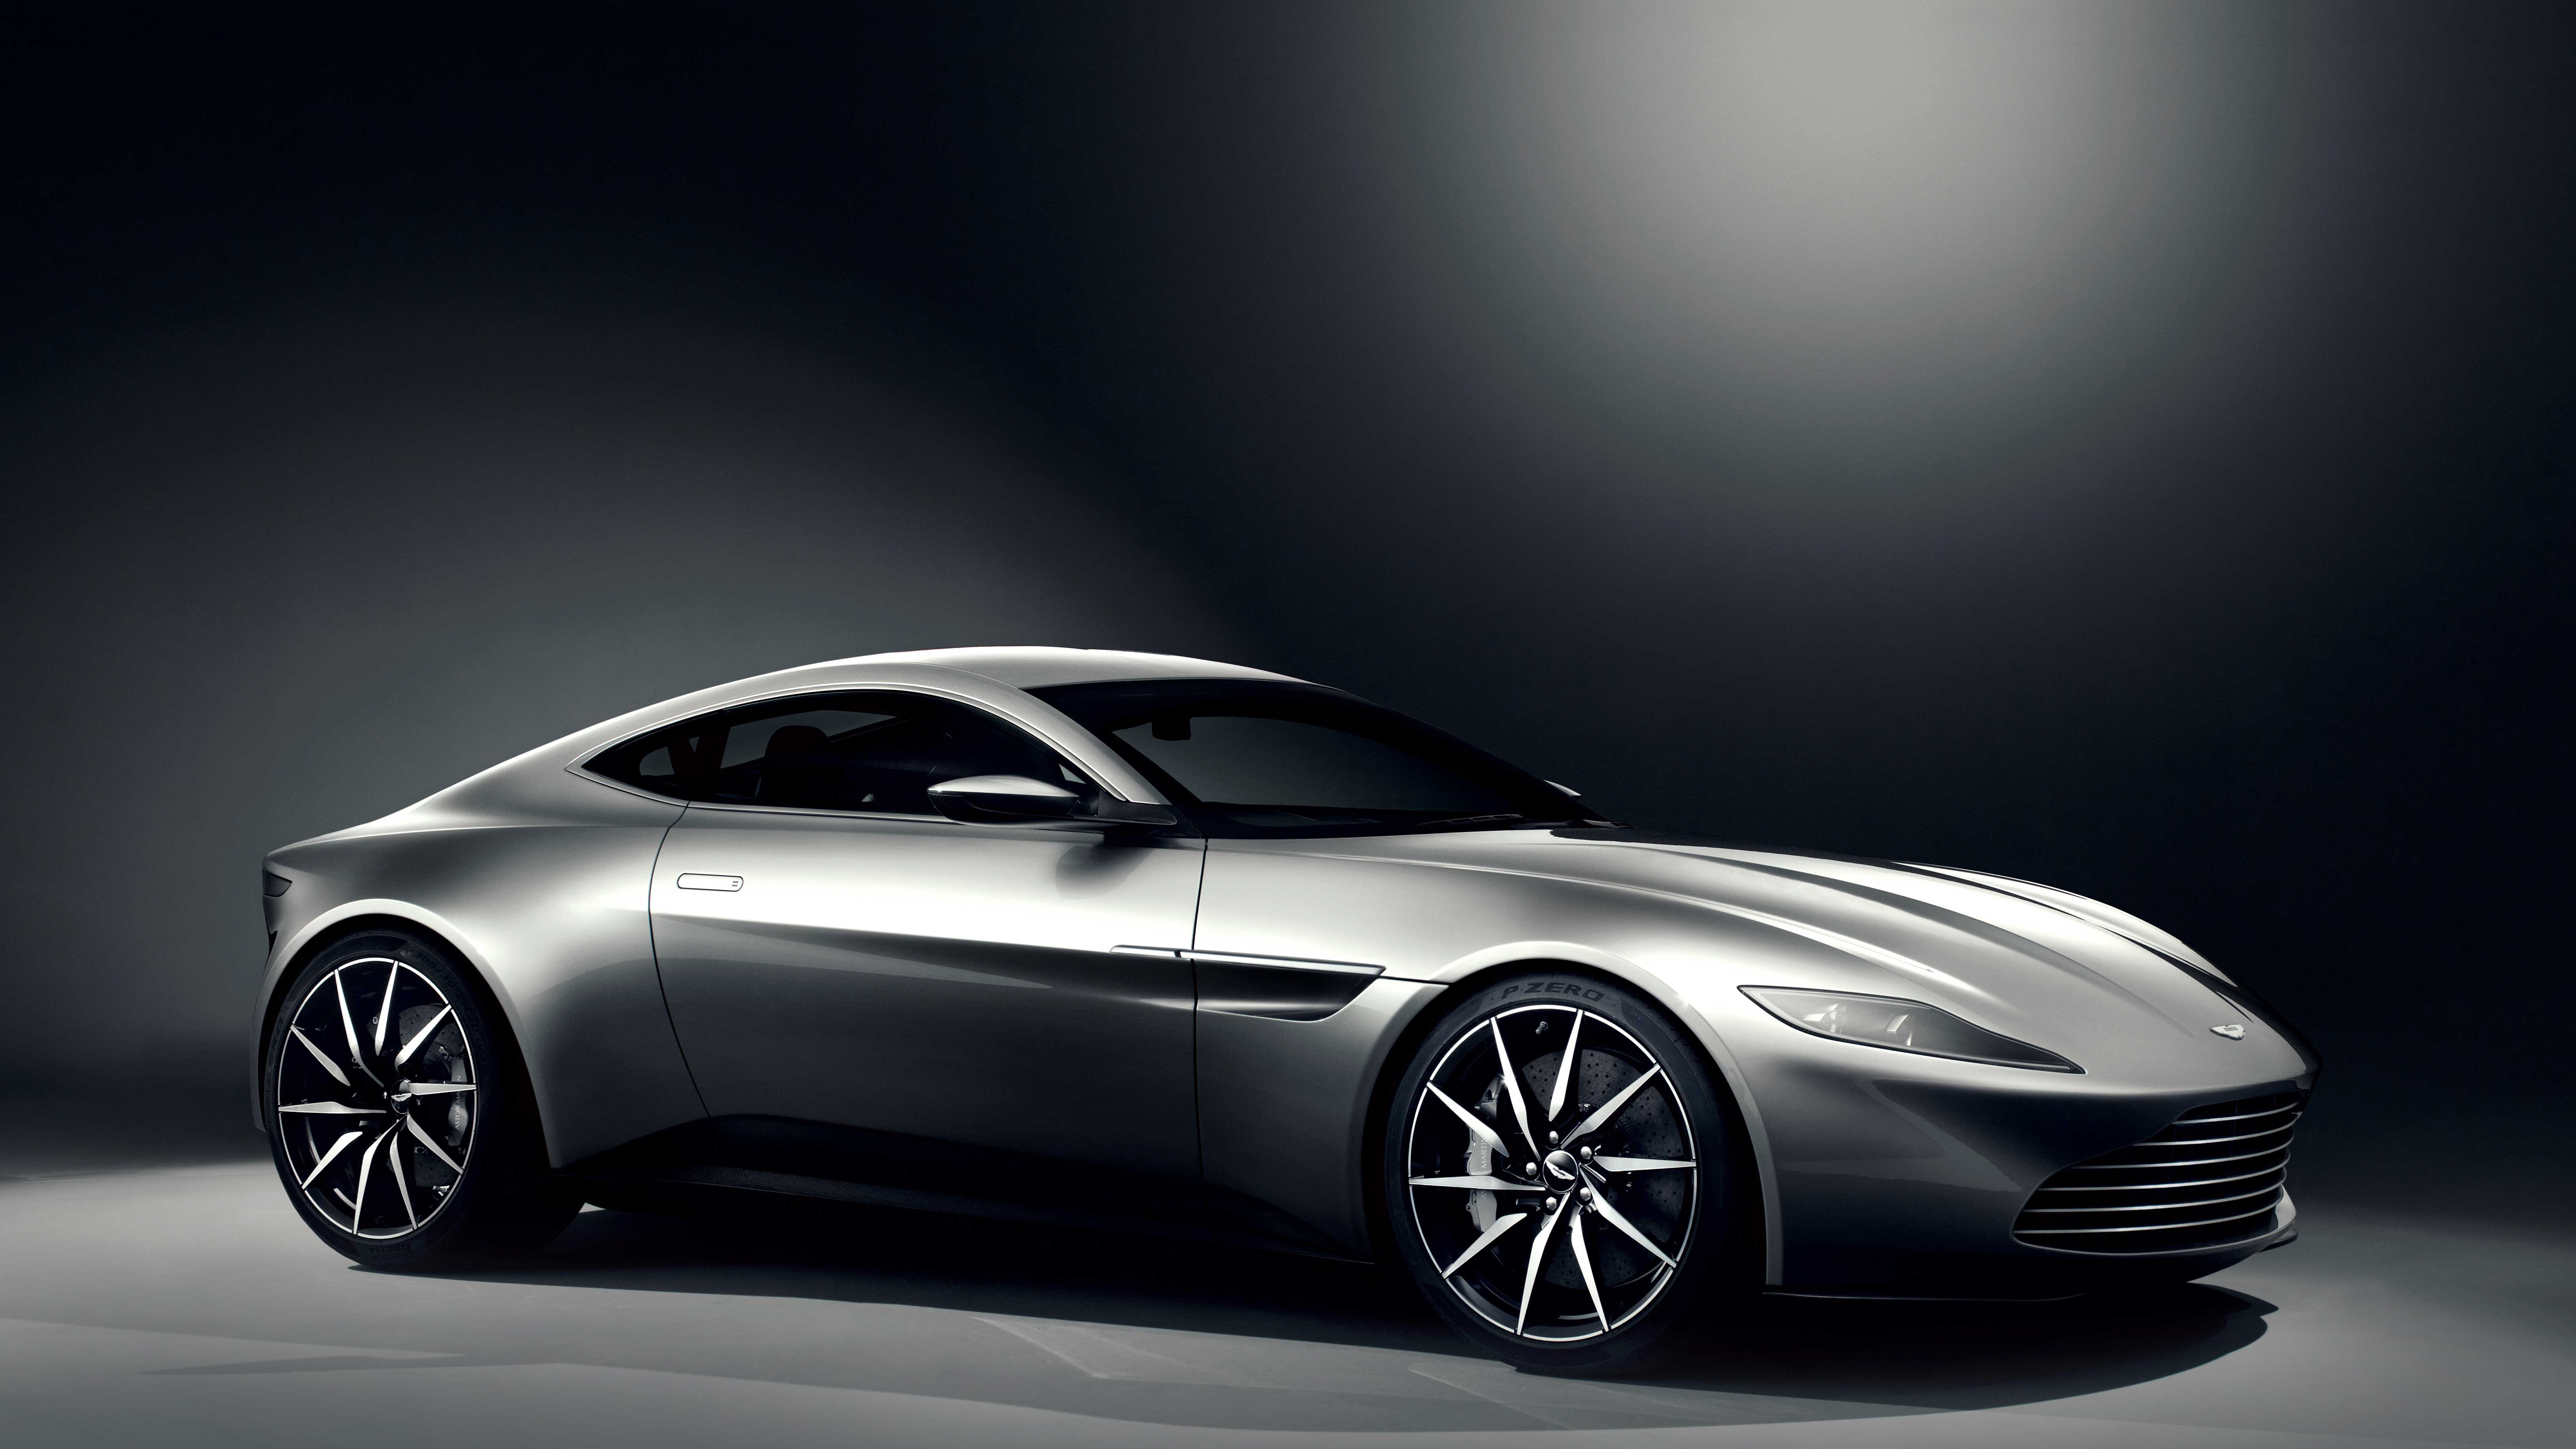 James Bond, Spectre, DB10, Aston Martin